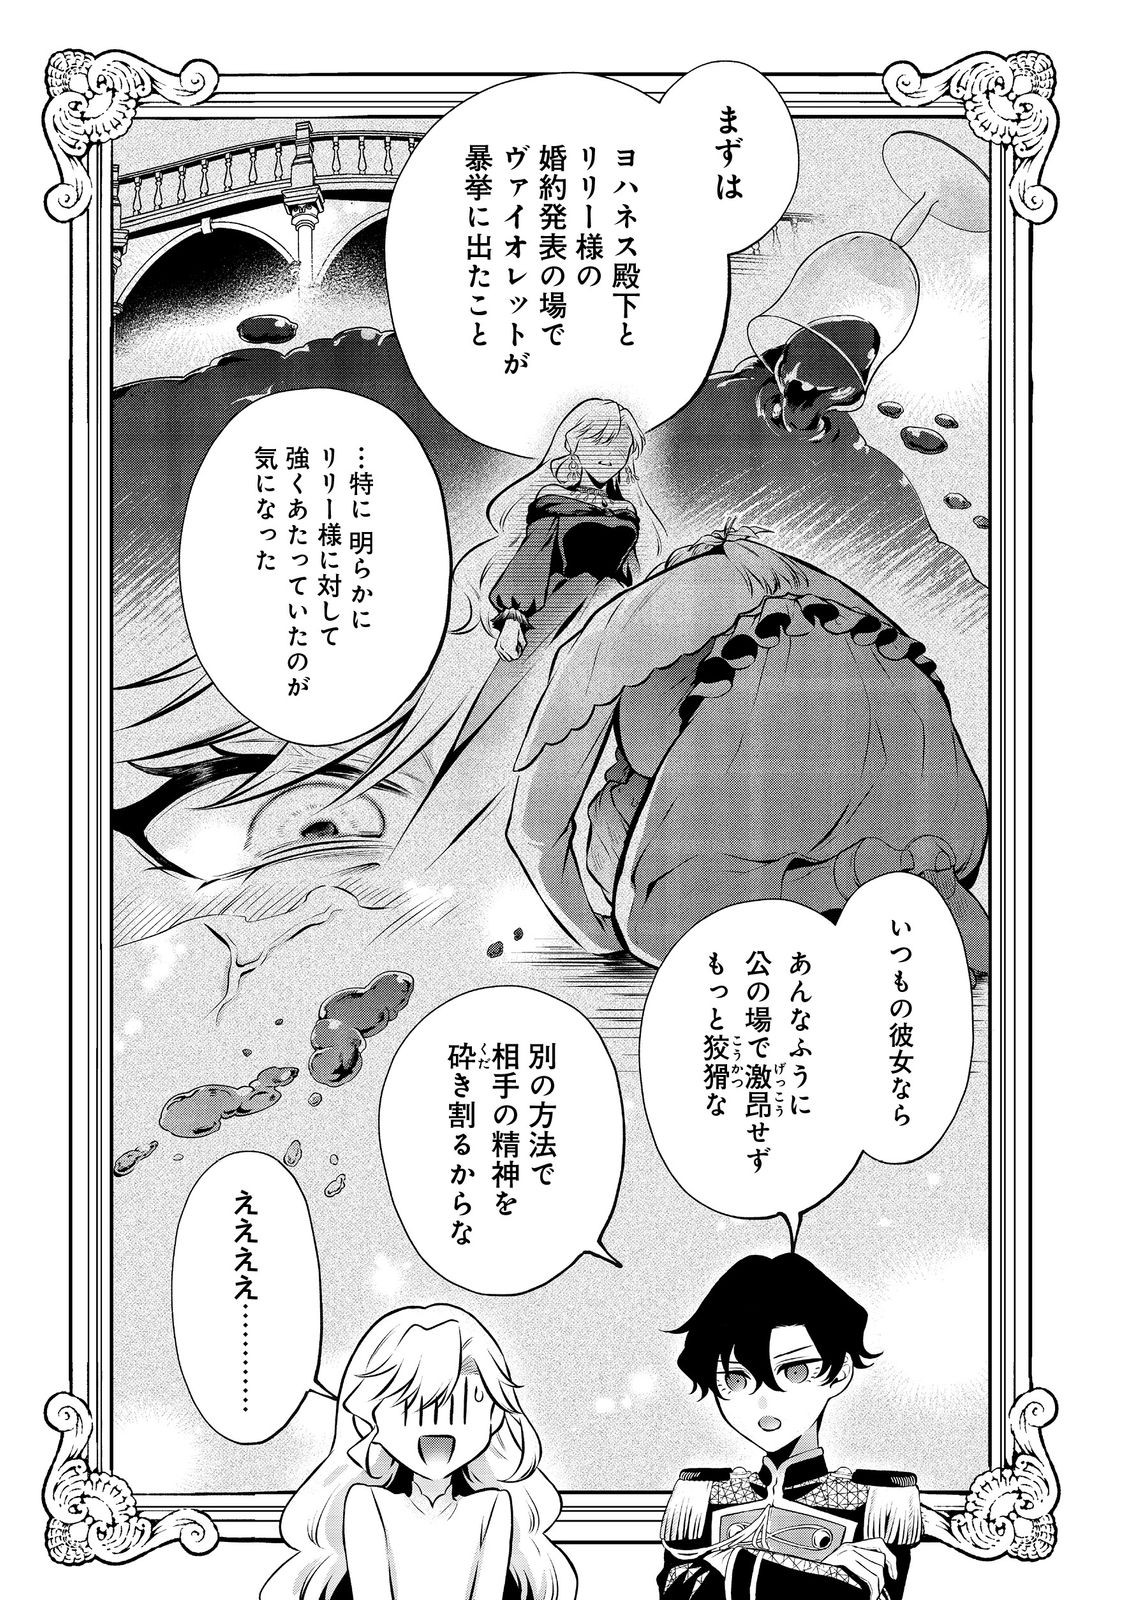 Megasametara Tougokusareta Akujo Datta - Chapter 6.2 - Page 2